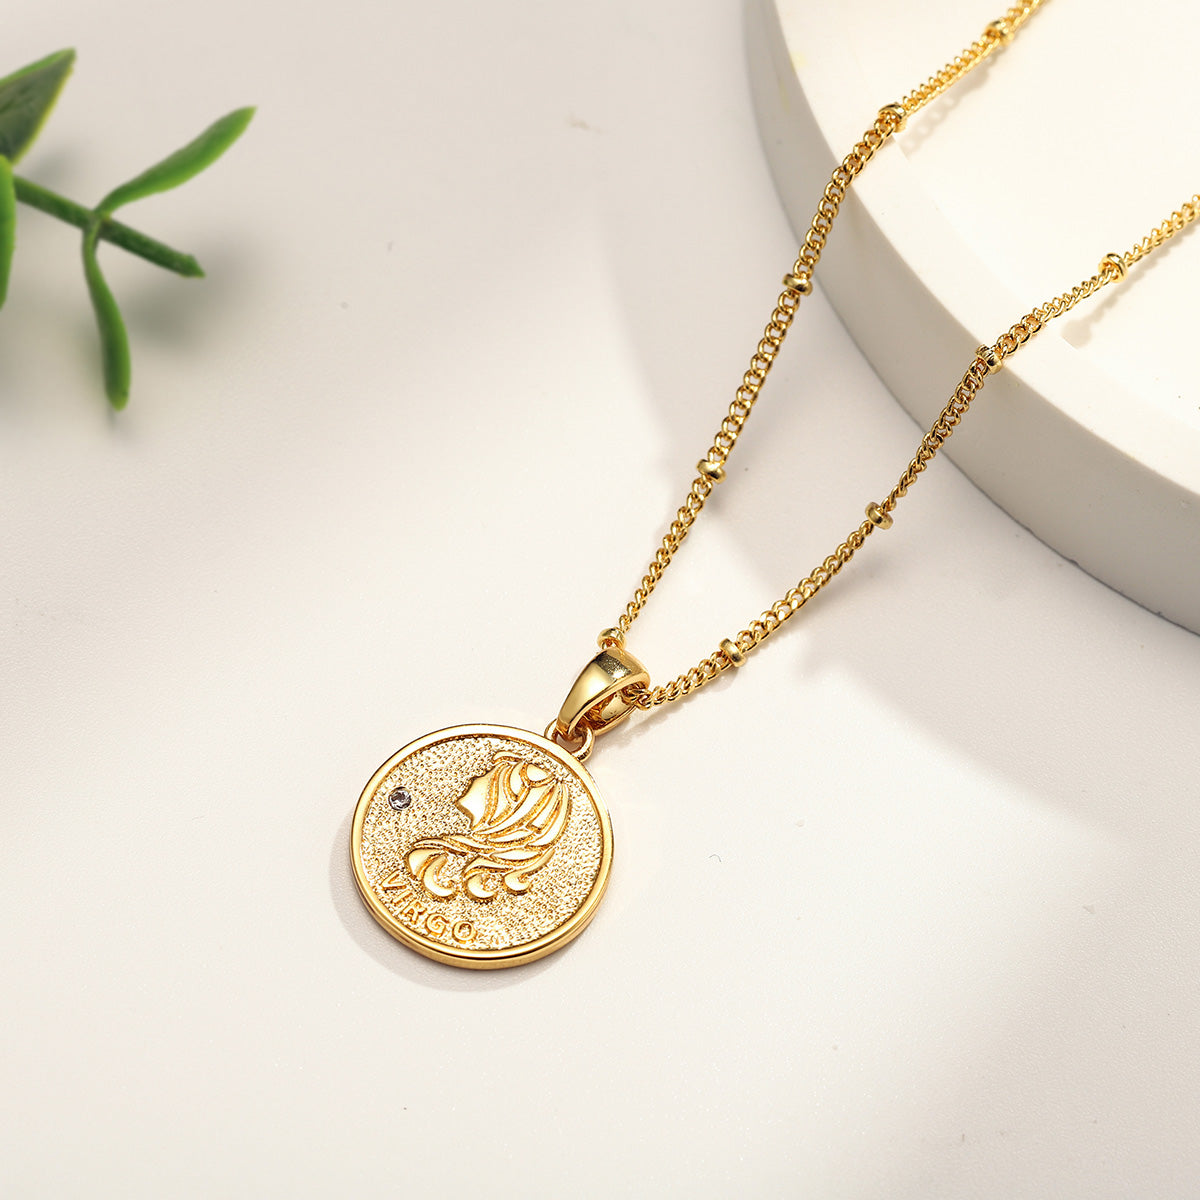 Virgo Constellation Coin Pendant Vintage Necklace